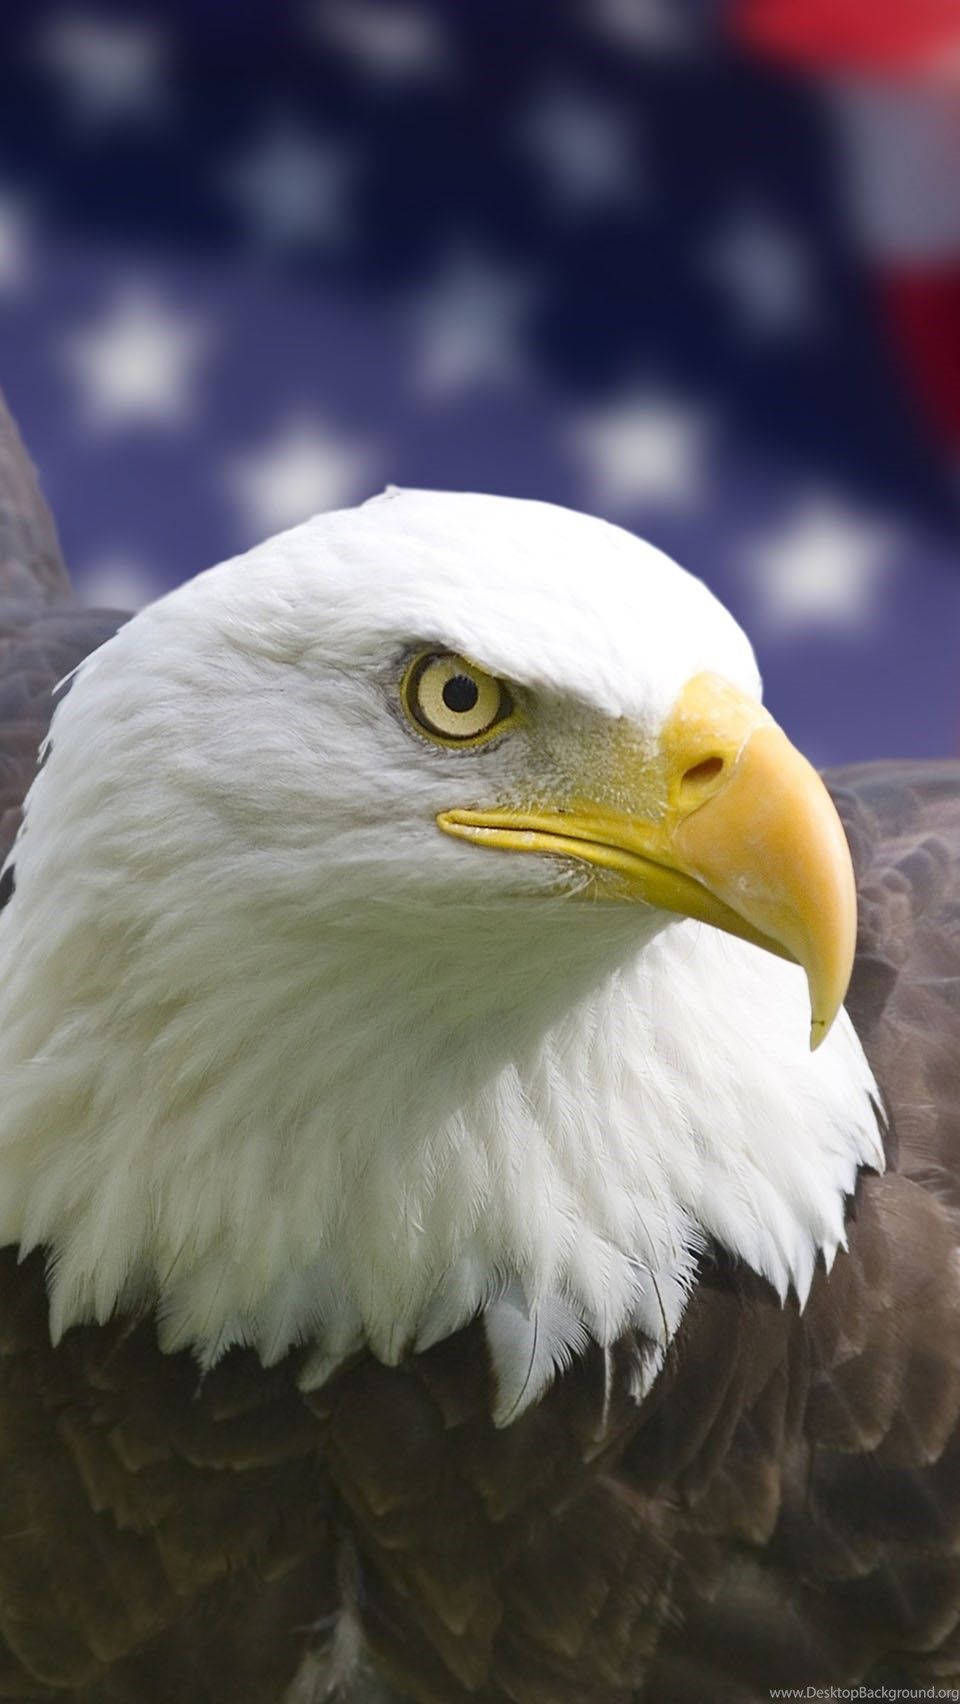 America Iphone Photo Of A Bald Eagle Wallpaper